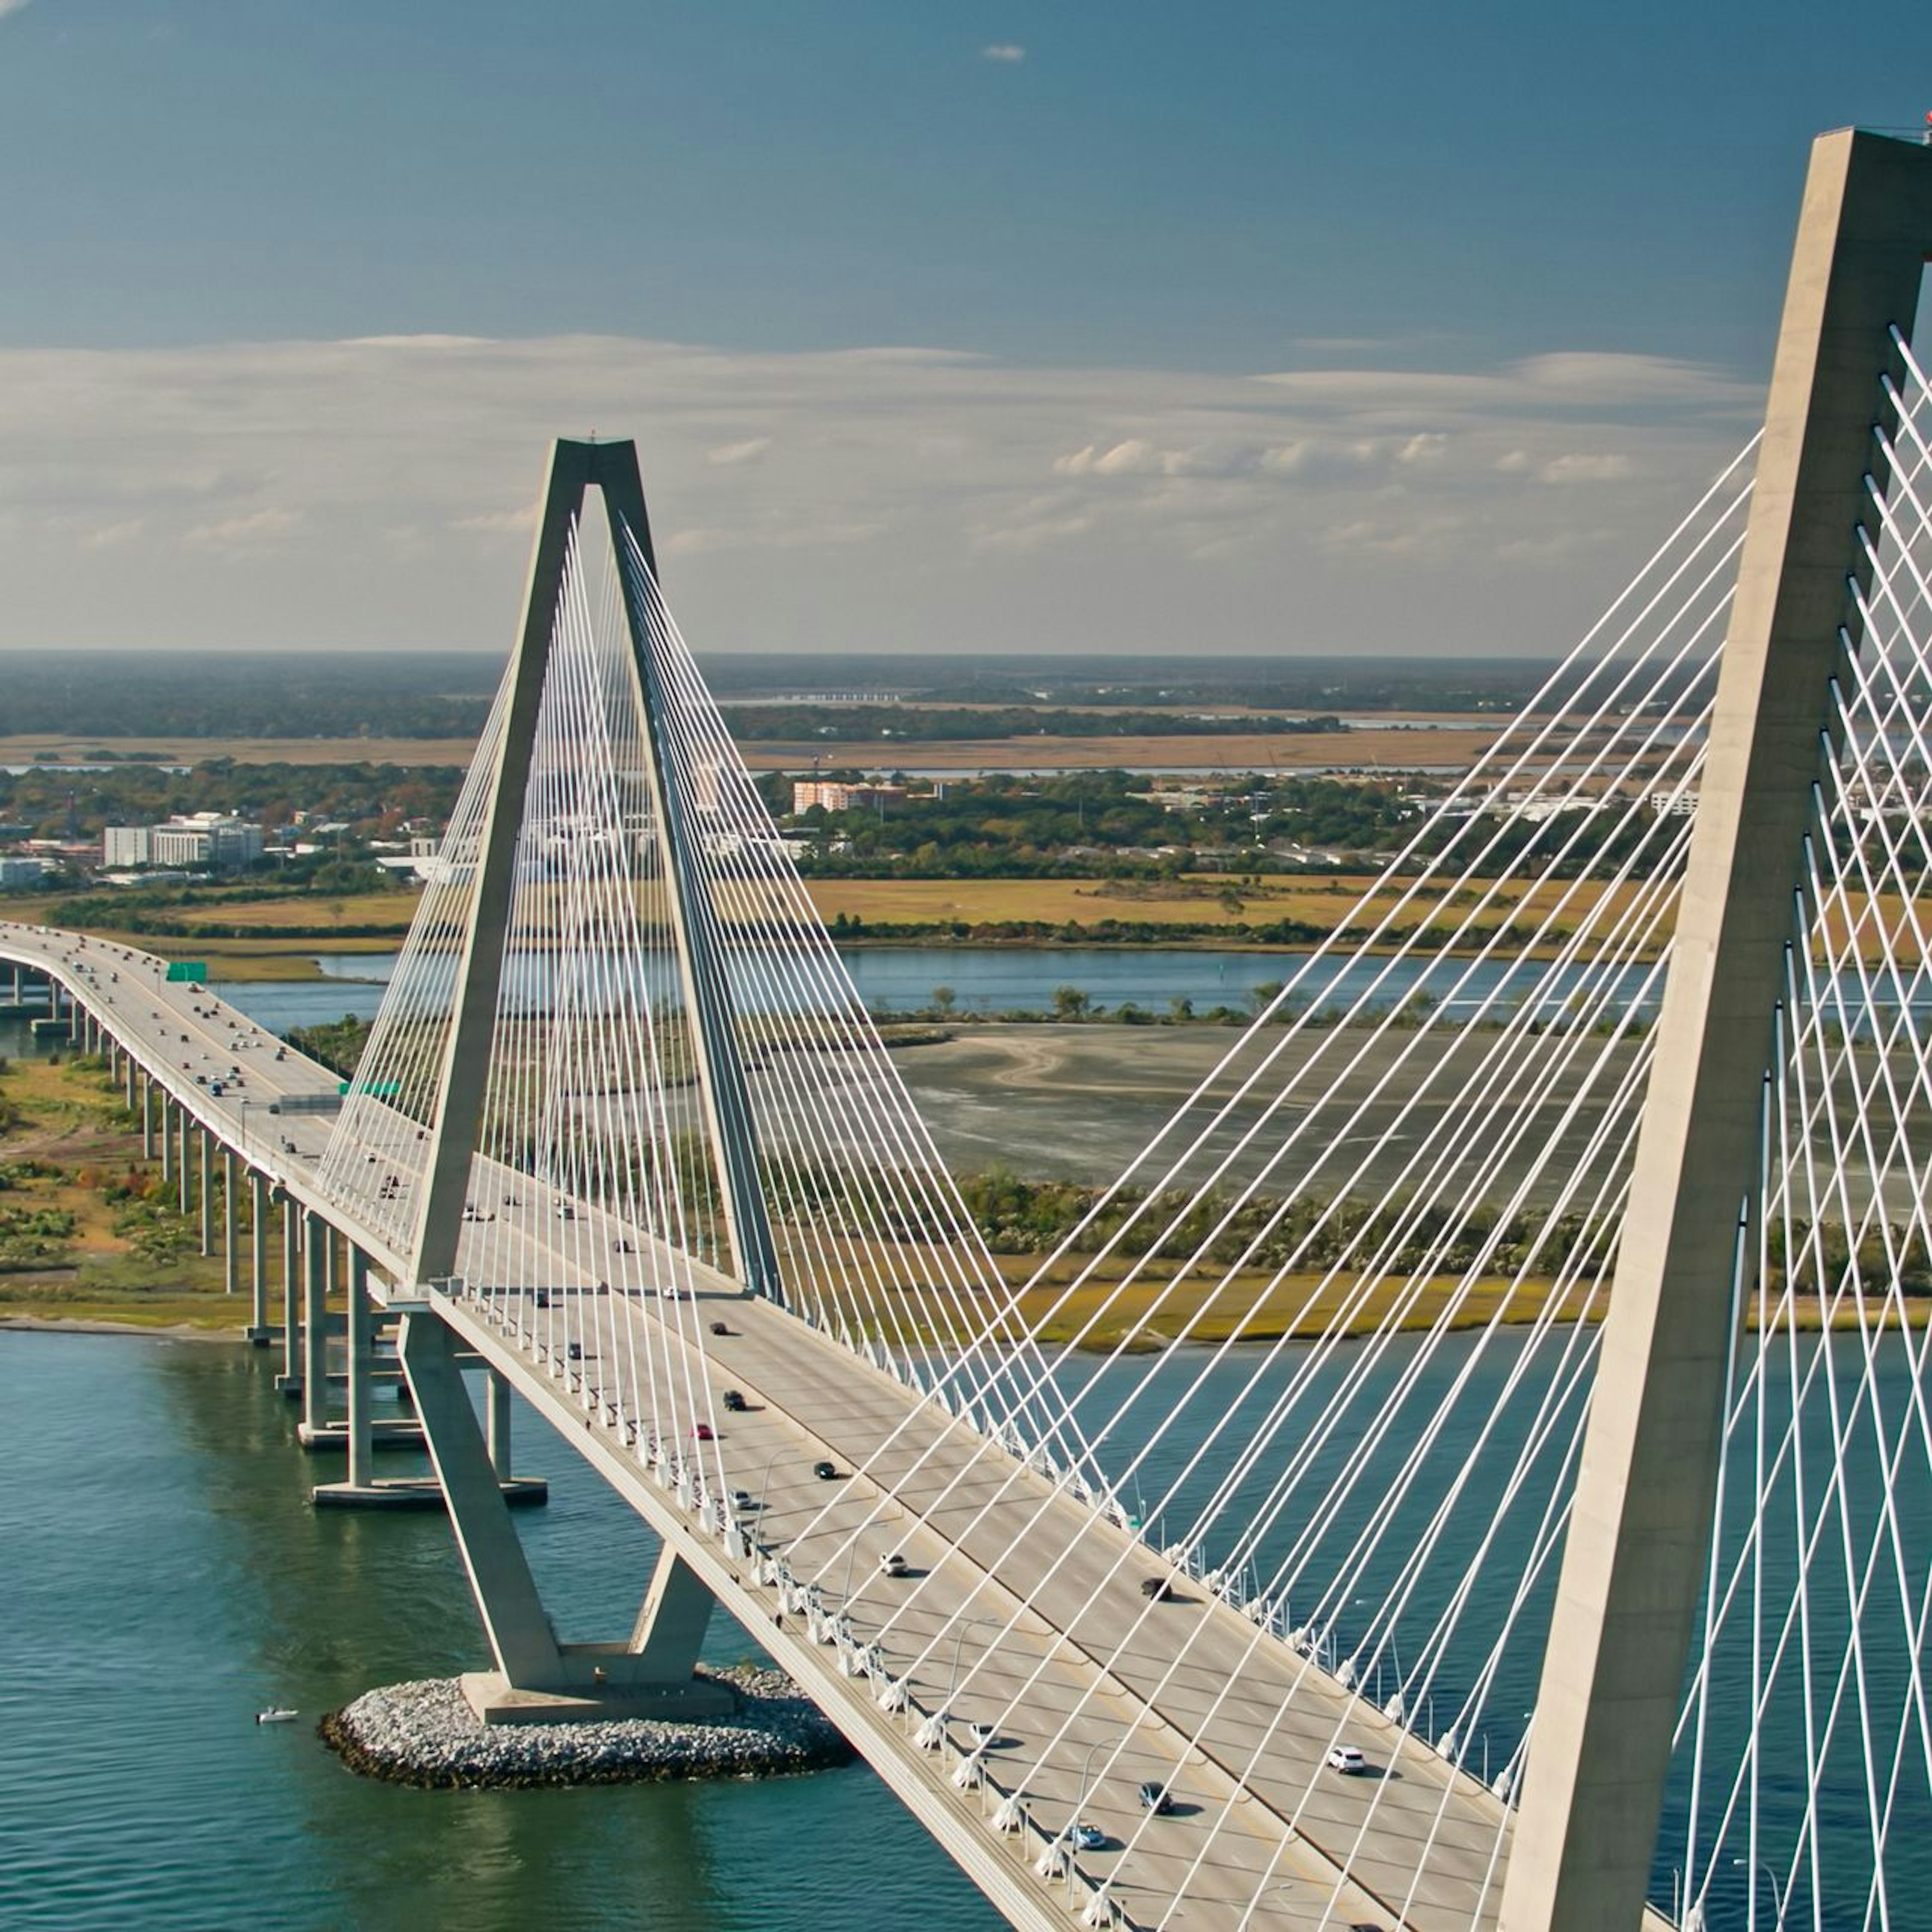 Arthur Ravenel Jr. Bridge located in Charleston, South Carolina